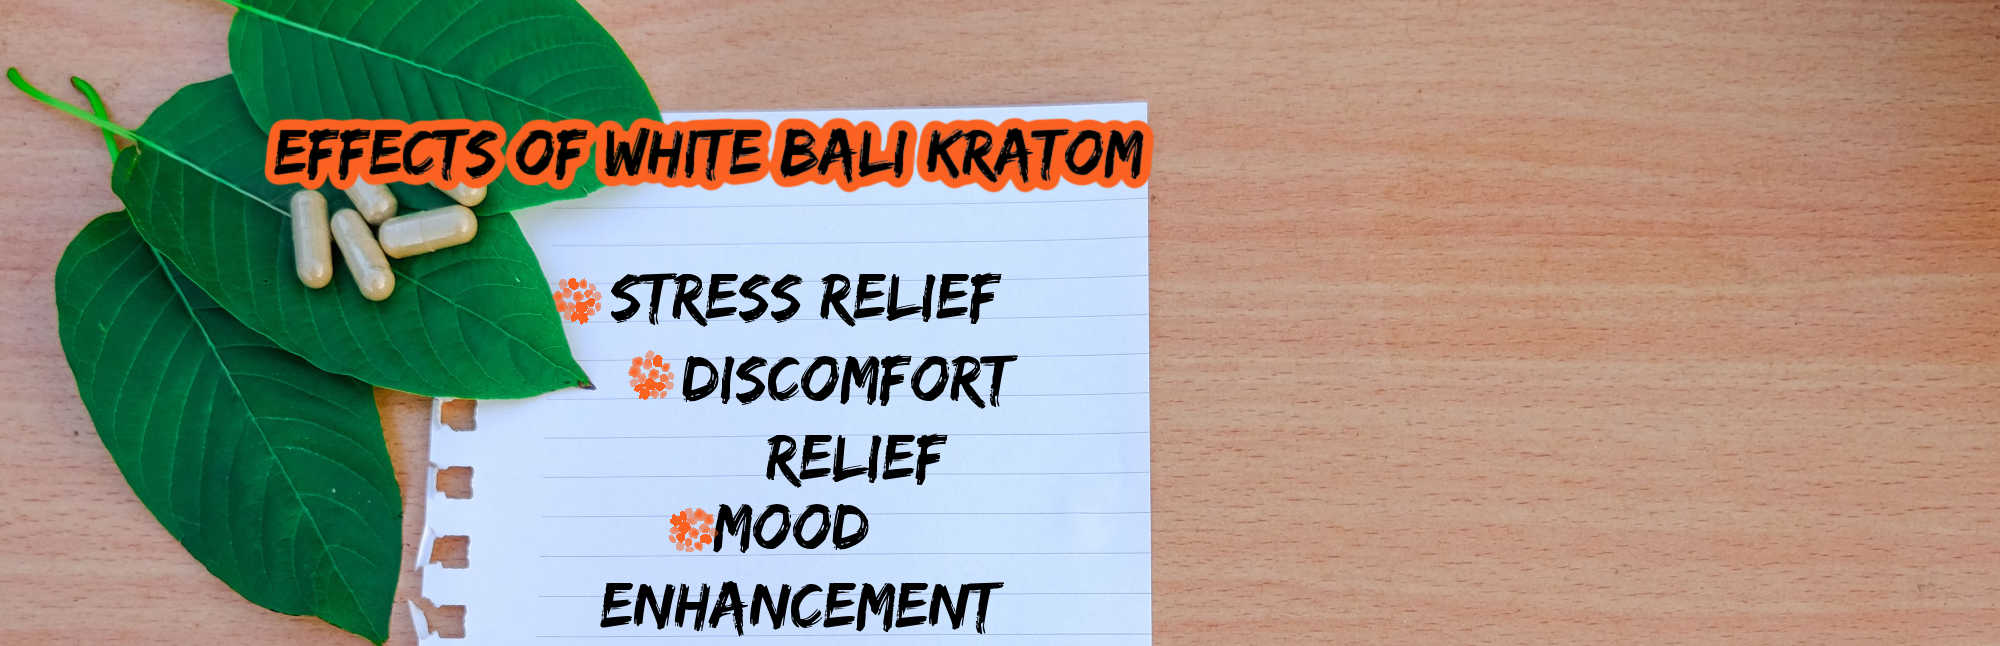 image of white bali kratom effects